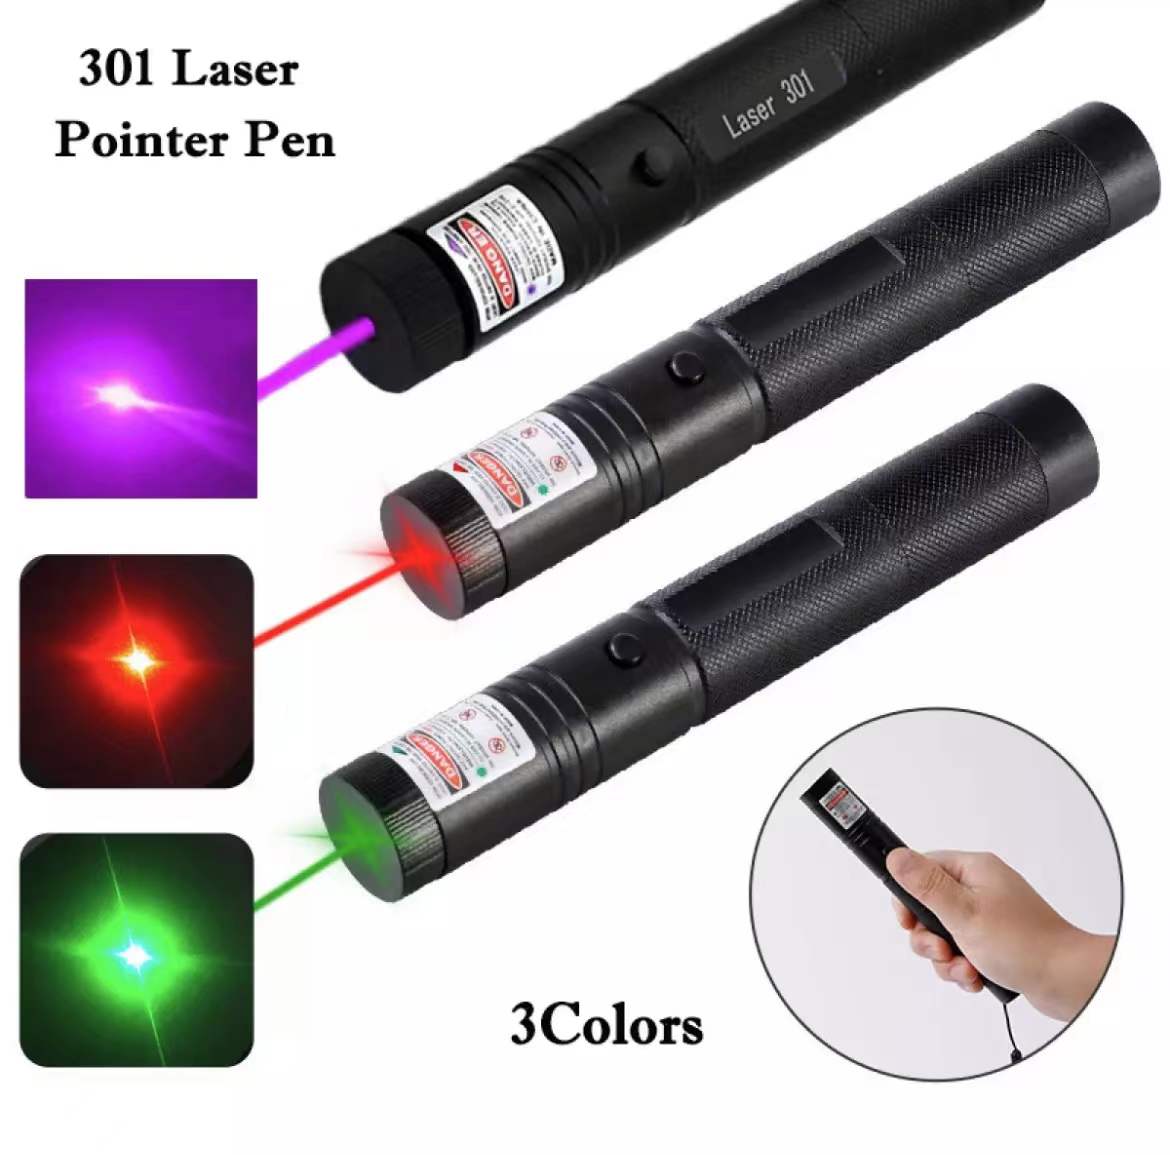 Visible Beam Light Lazer 10000m 650nm 301 High Power Pointer Purple Laser Pen 